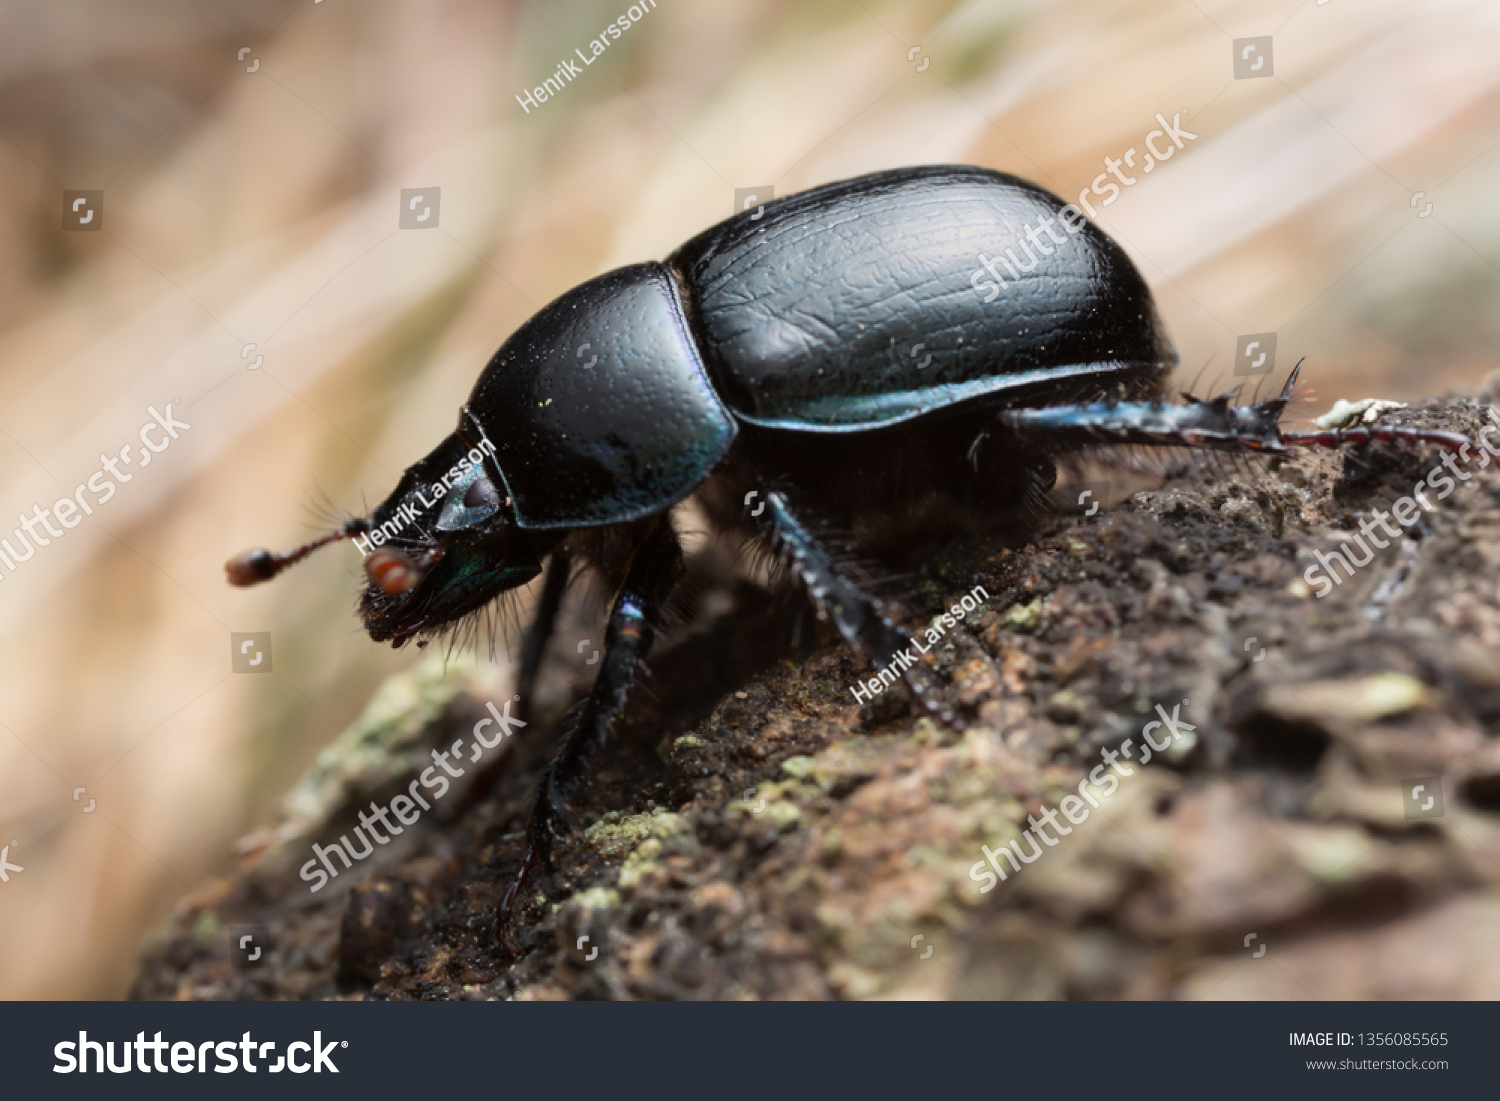 Dor beetle, Anoplotrupes stercorosus, macro photo #1356085565